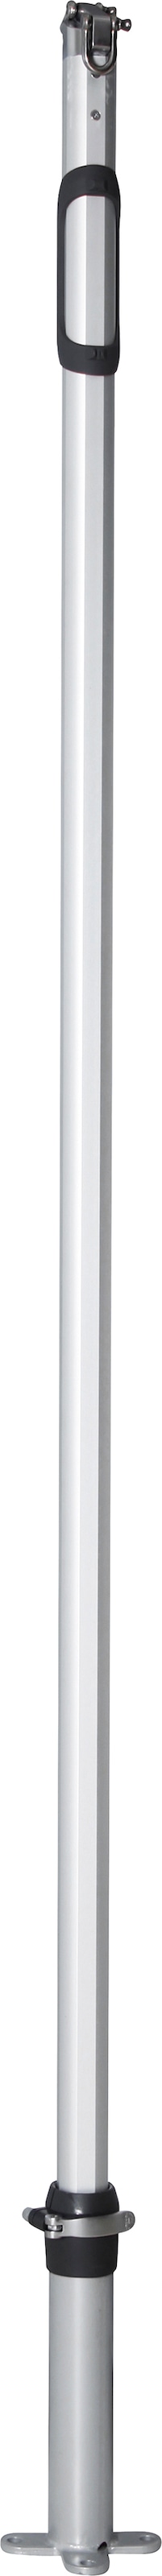 doppler® Sonnensegelmast »Alu-Pro«, Mast-Höhe ca. 220 cm inklusive Standfuß